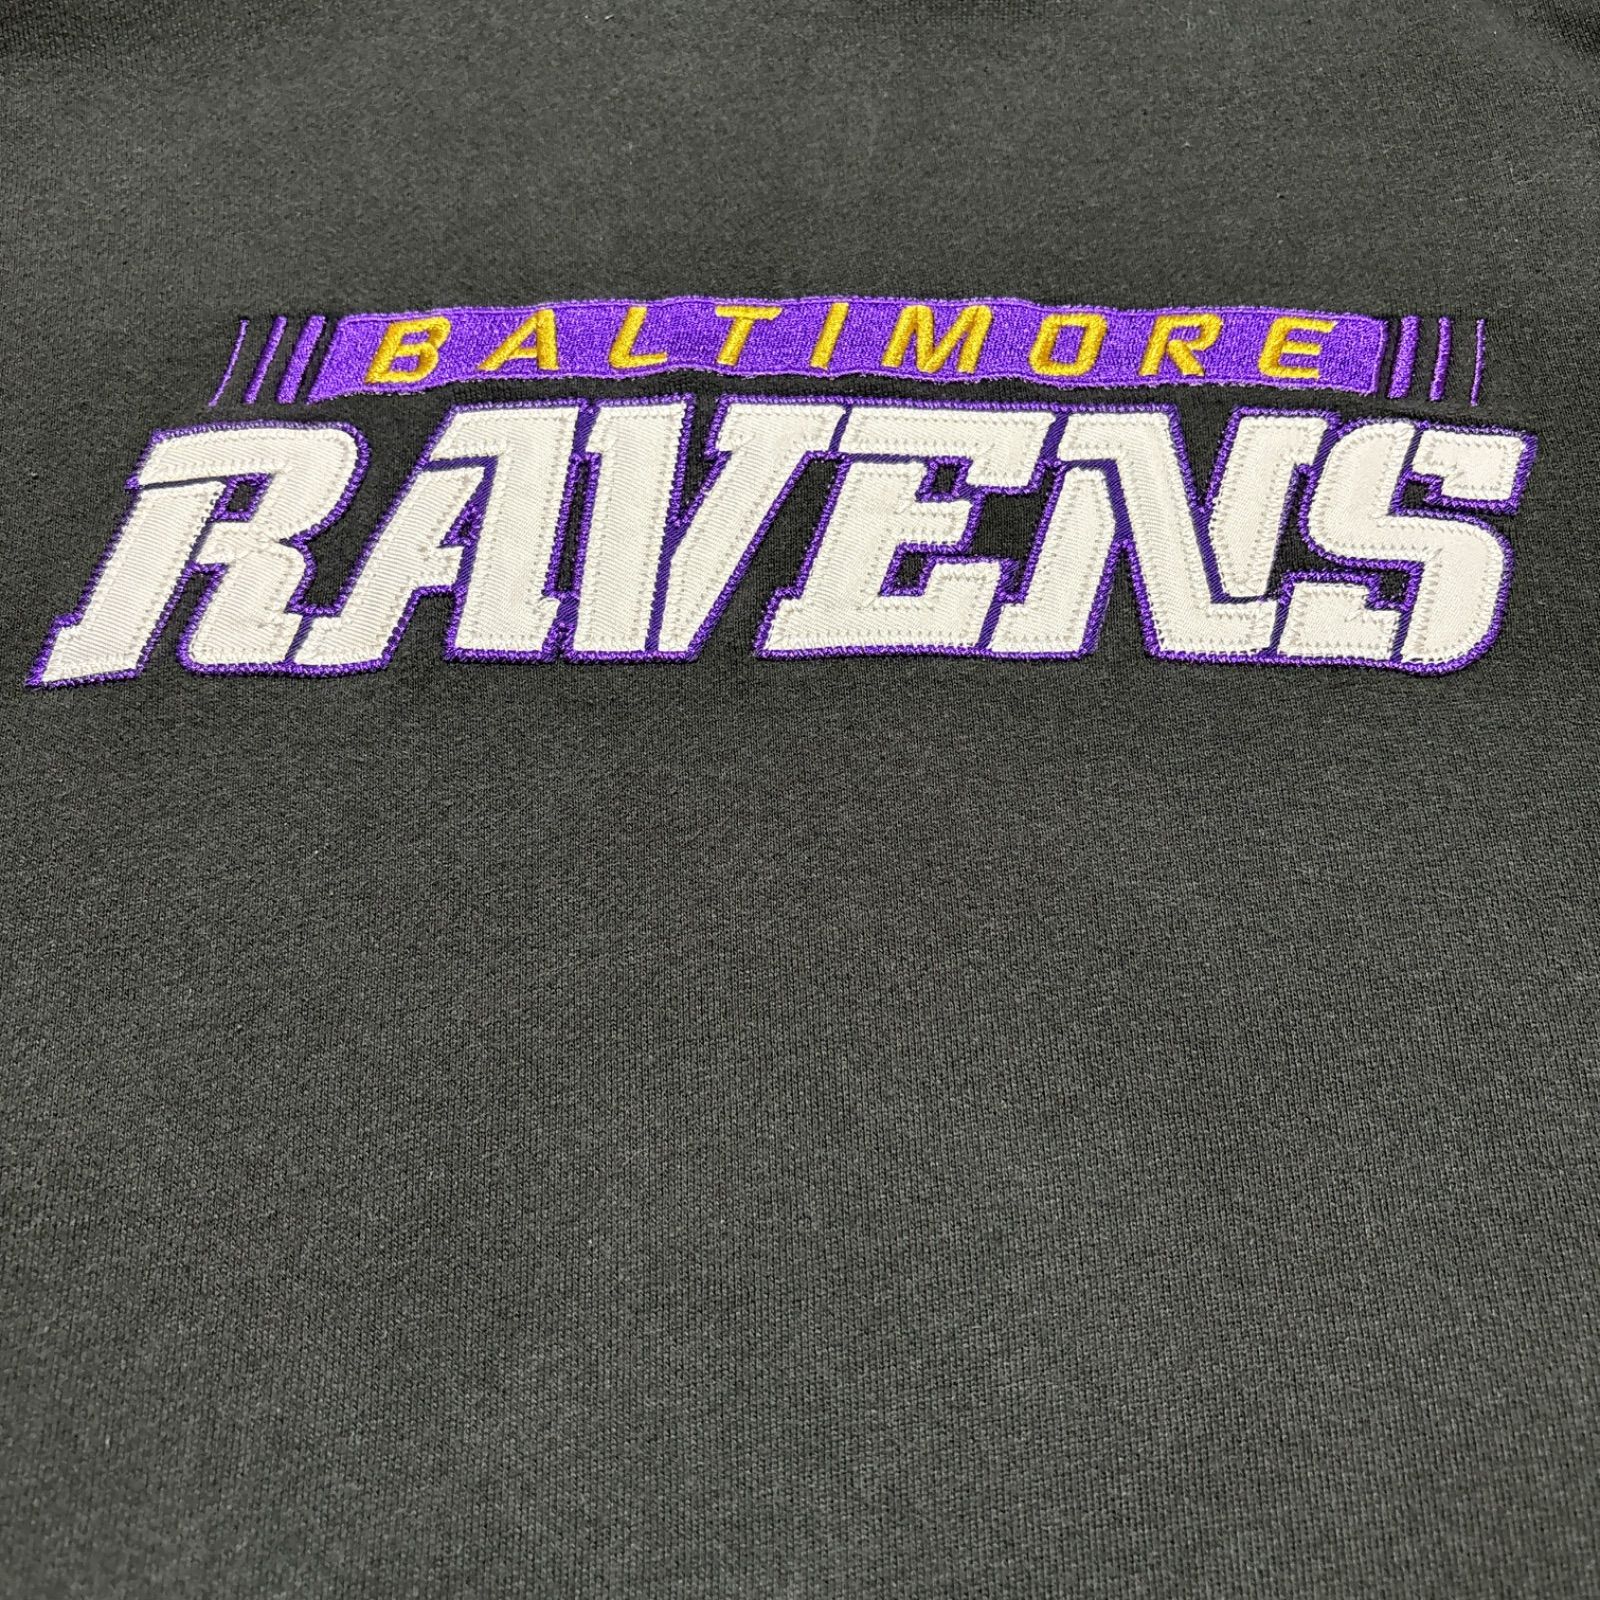 NFL Baltimore Ravens ボルチモア・レイブンズ スウェット パーカー L